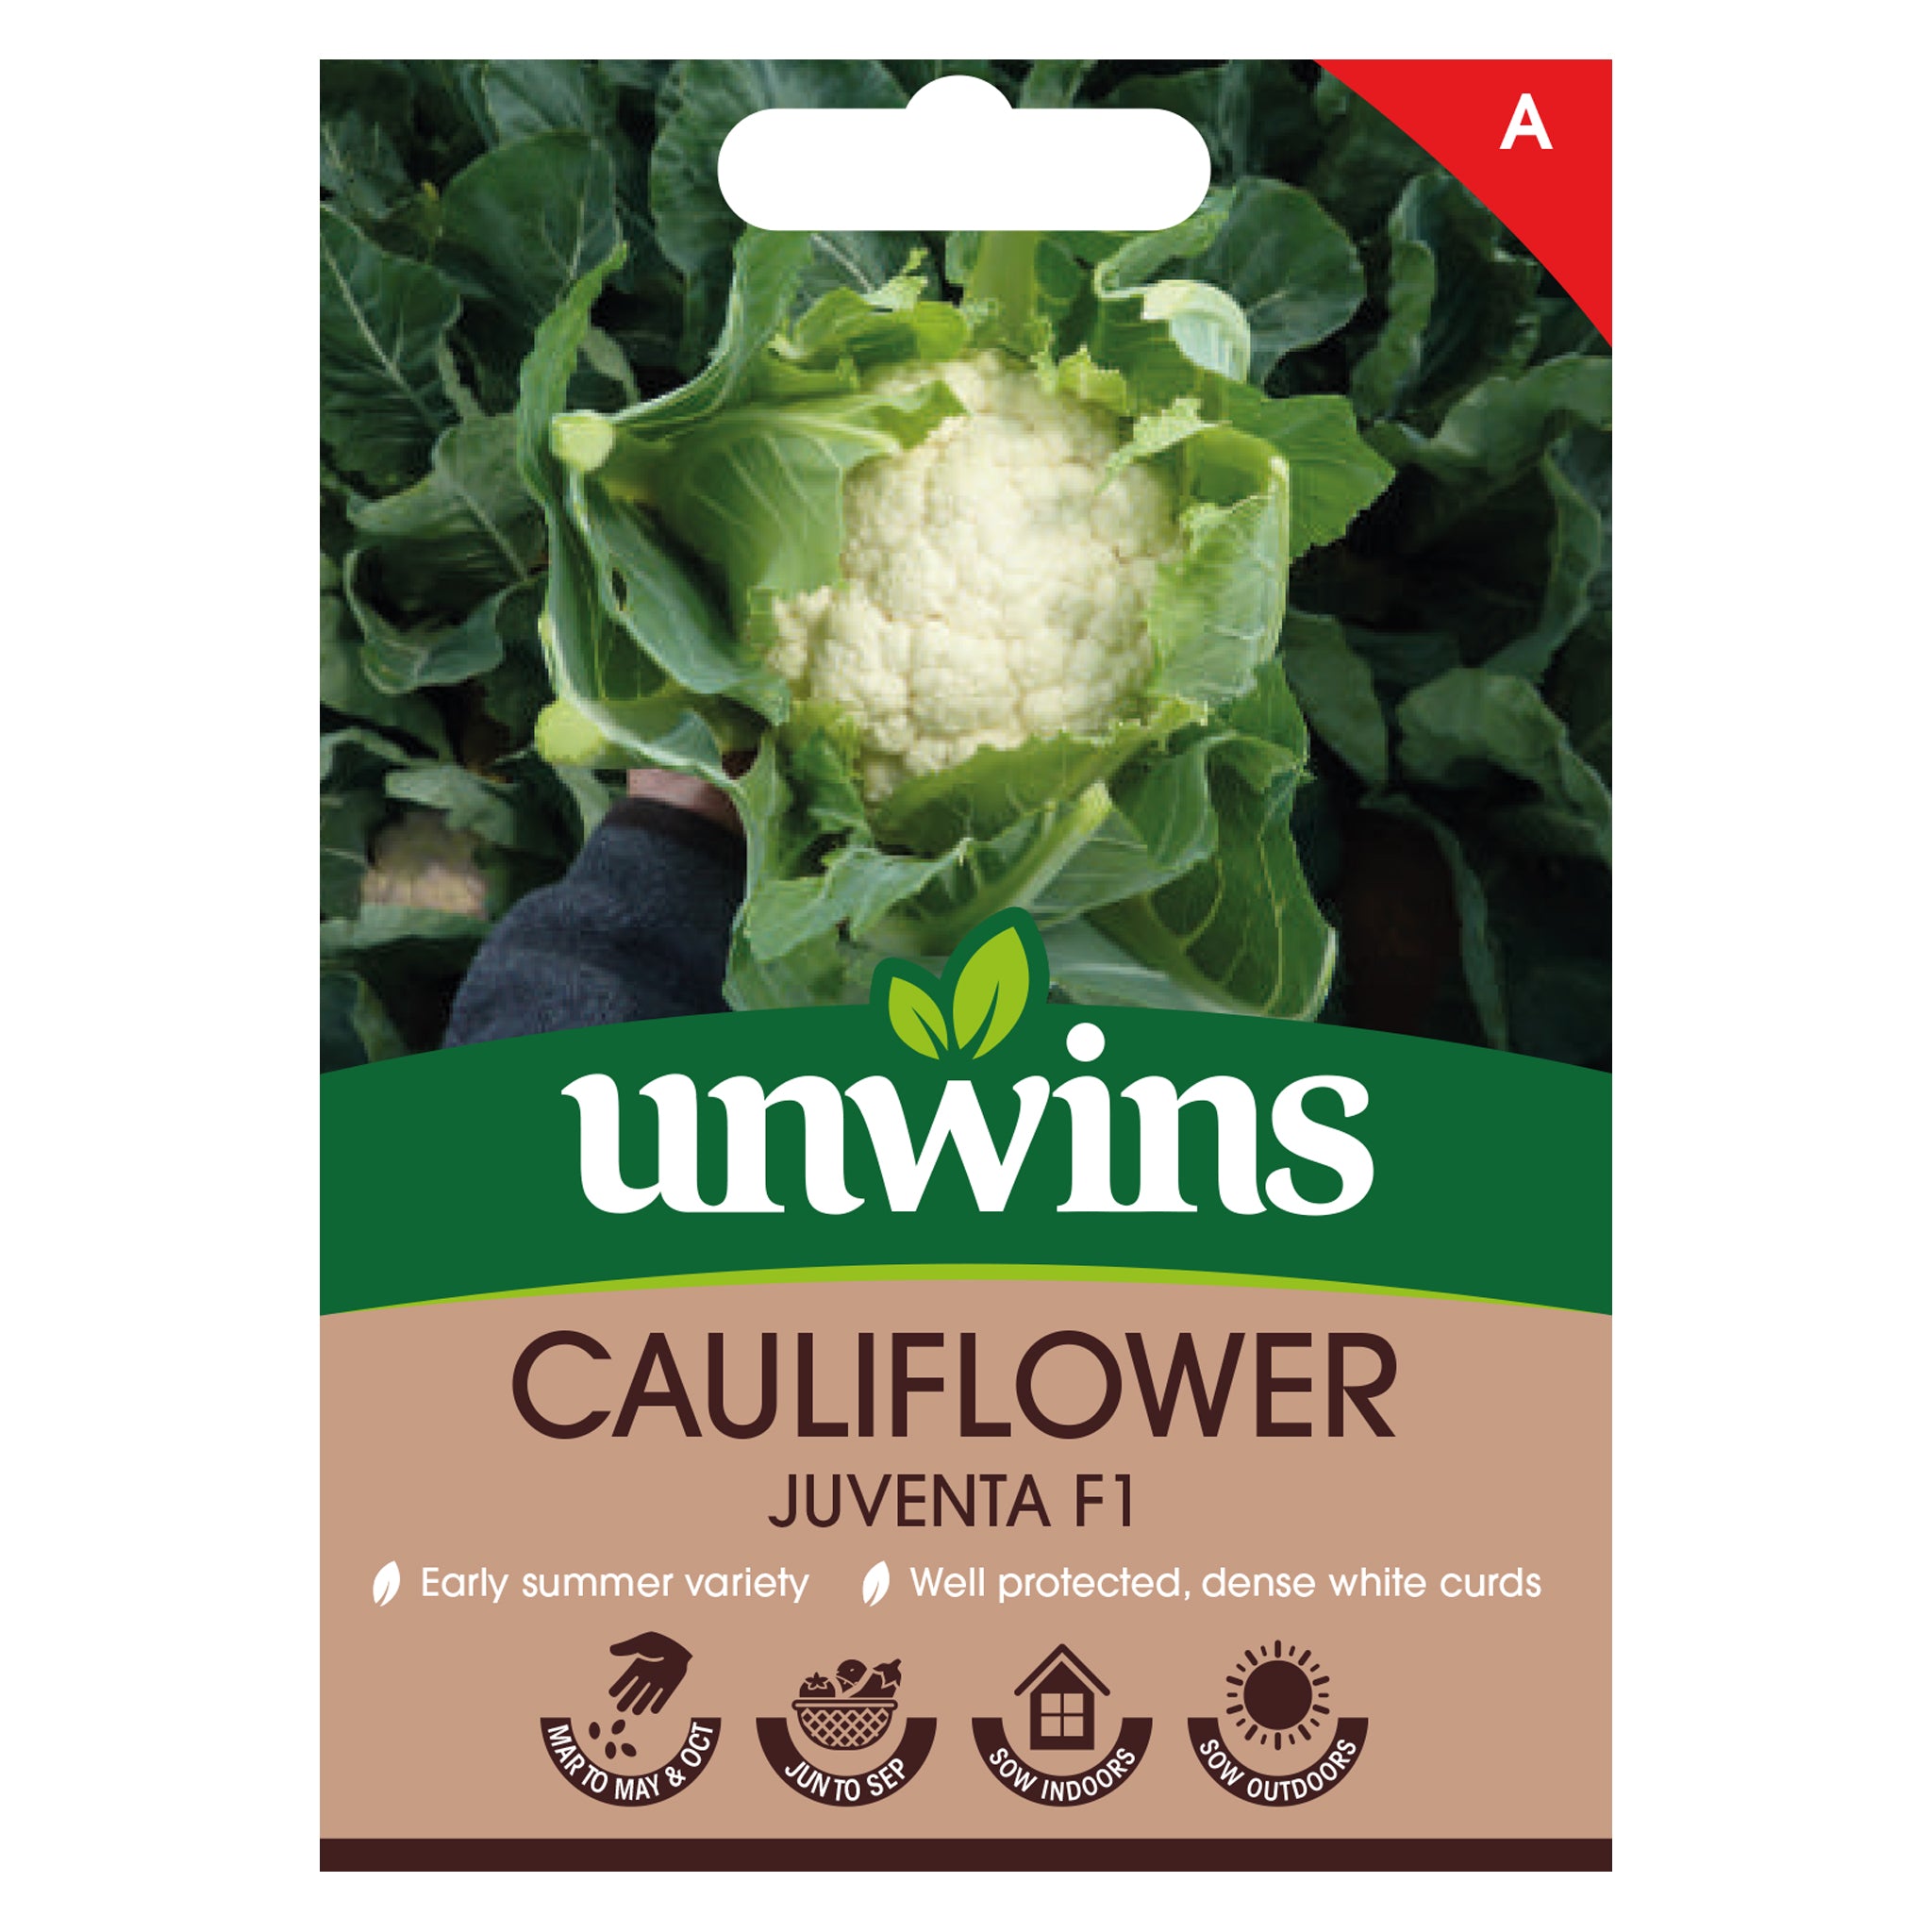 Unwins Cauliflower Juventa F1 Seeds